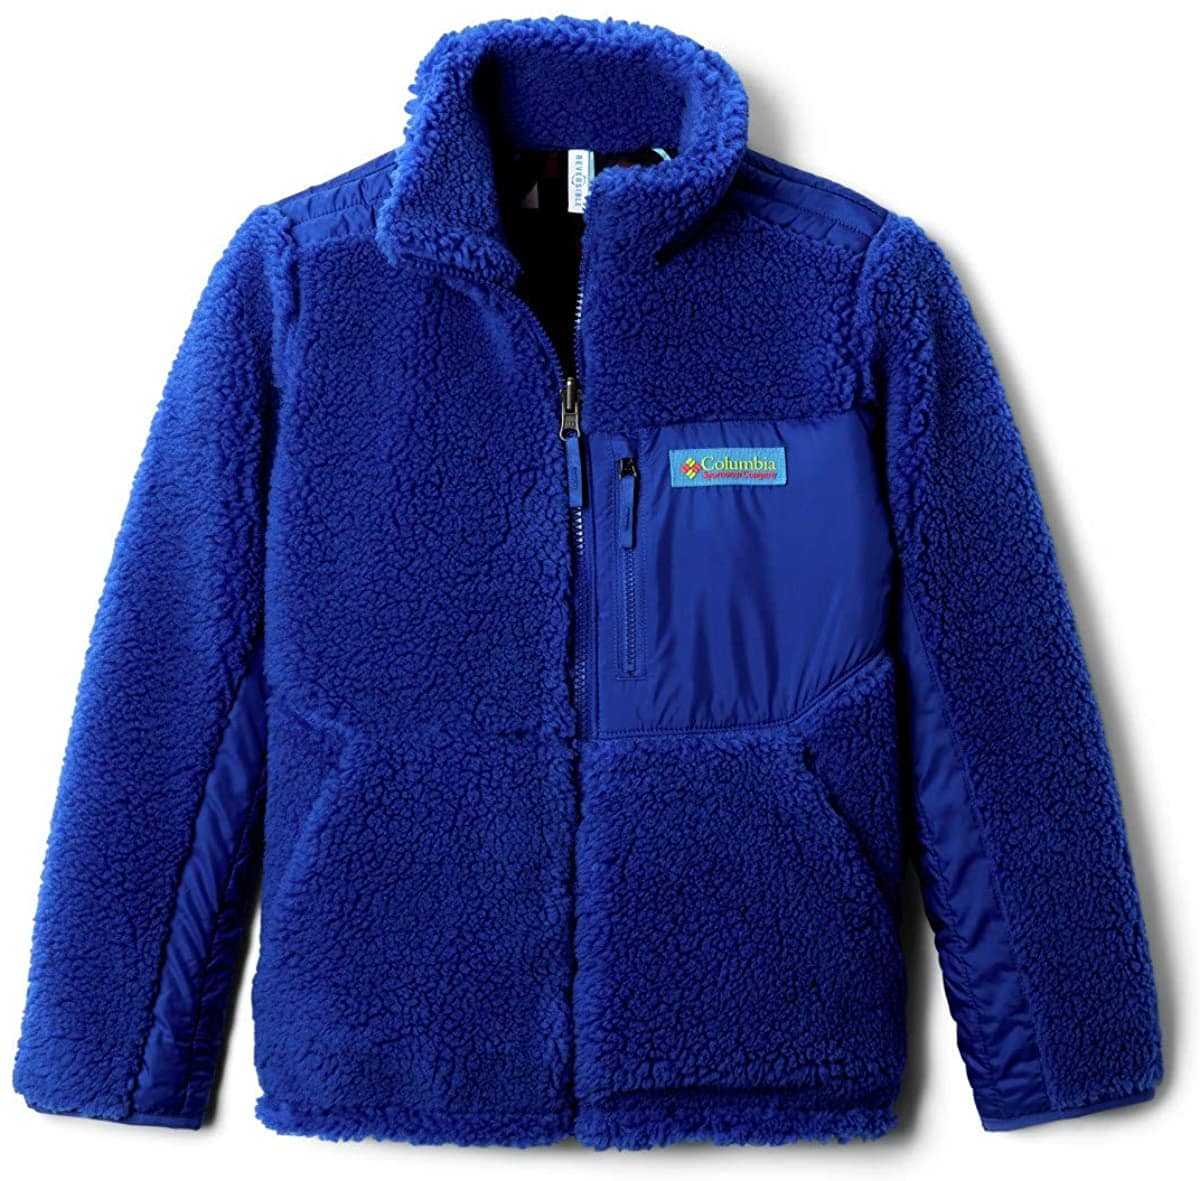 Columbia's 16 Warmest Fleece Jackets for Men, Women and Kids